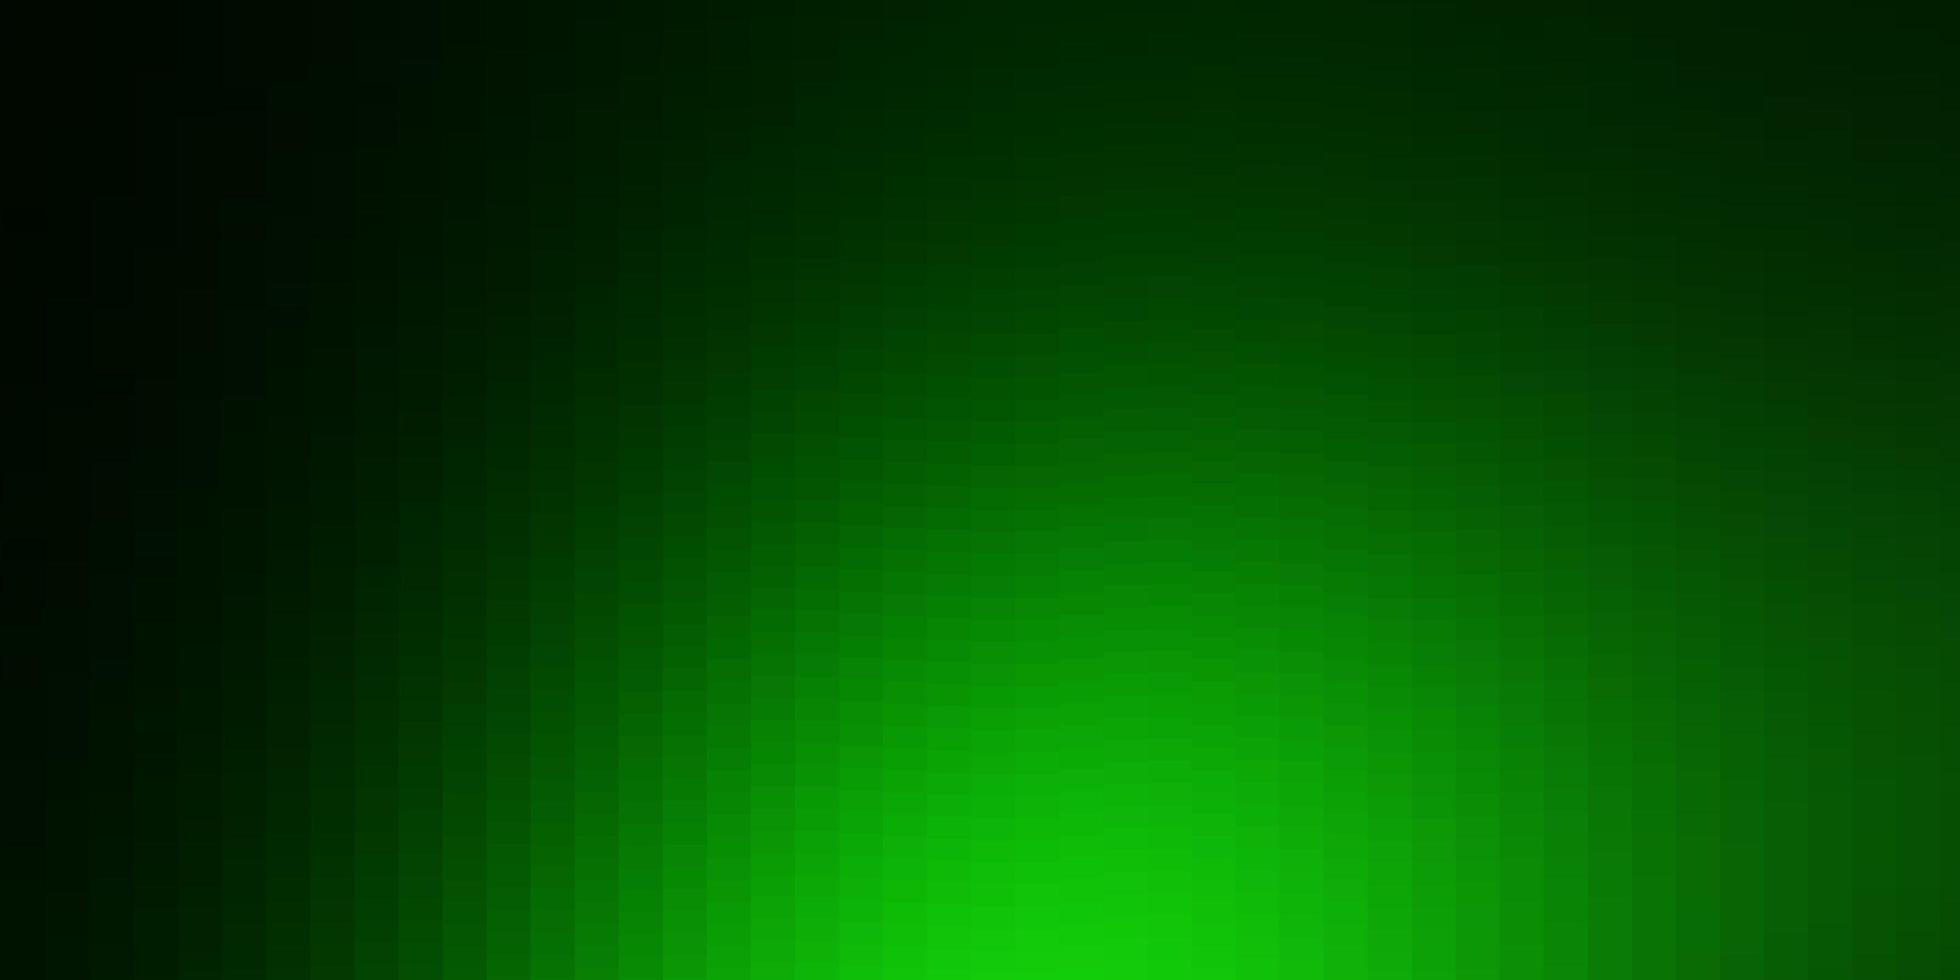 fundo verde claro em estilo poligonal. vetor